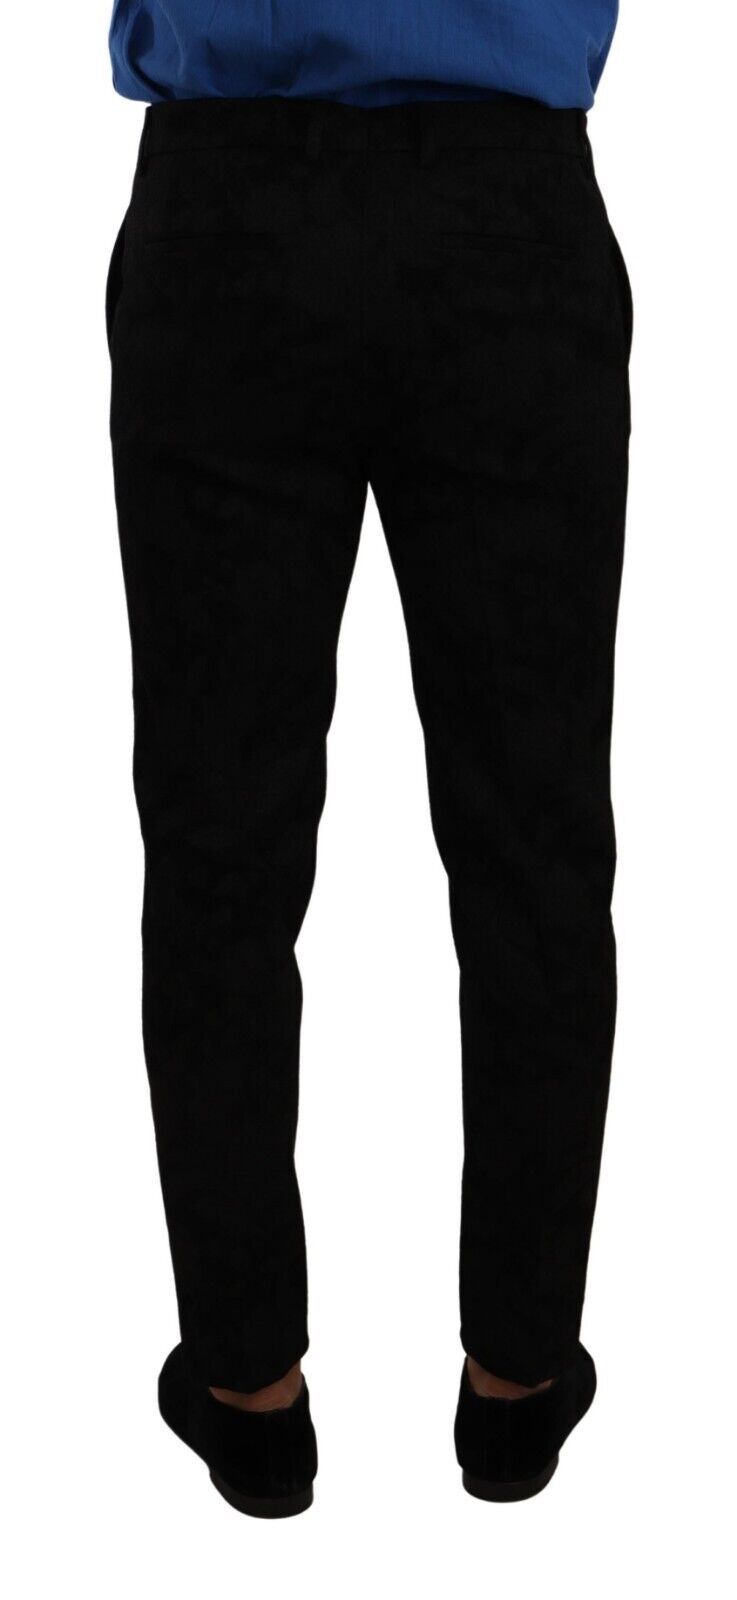 Dolce & Gabbana Elegant Slim Fit Dress Pants in Black Brocade